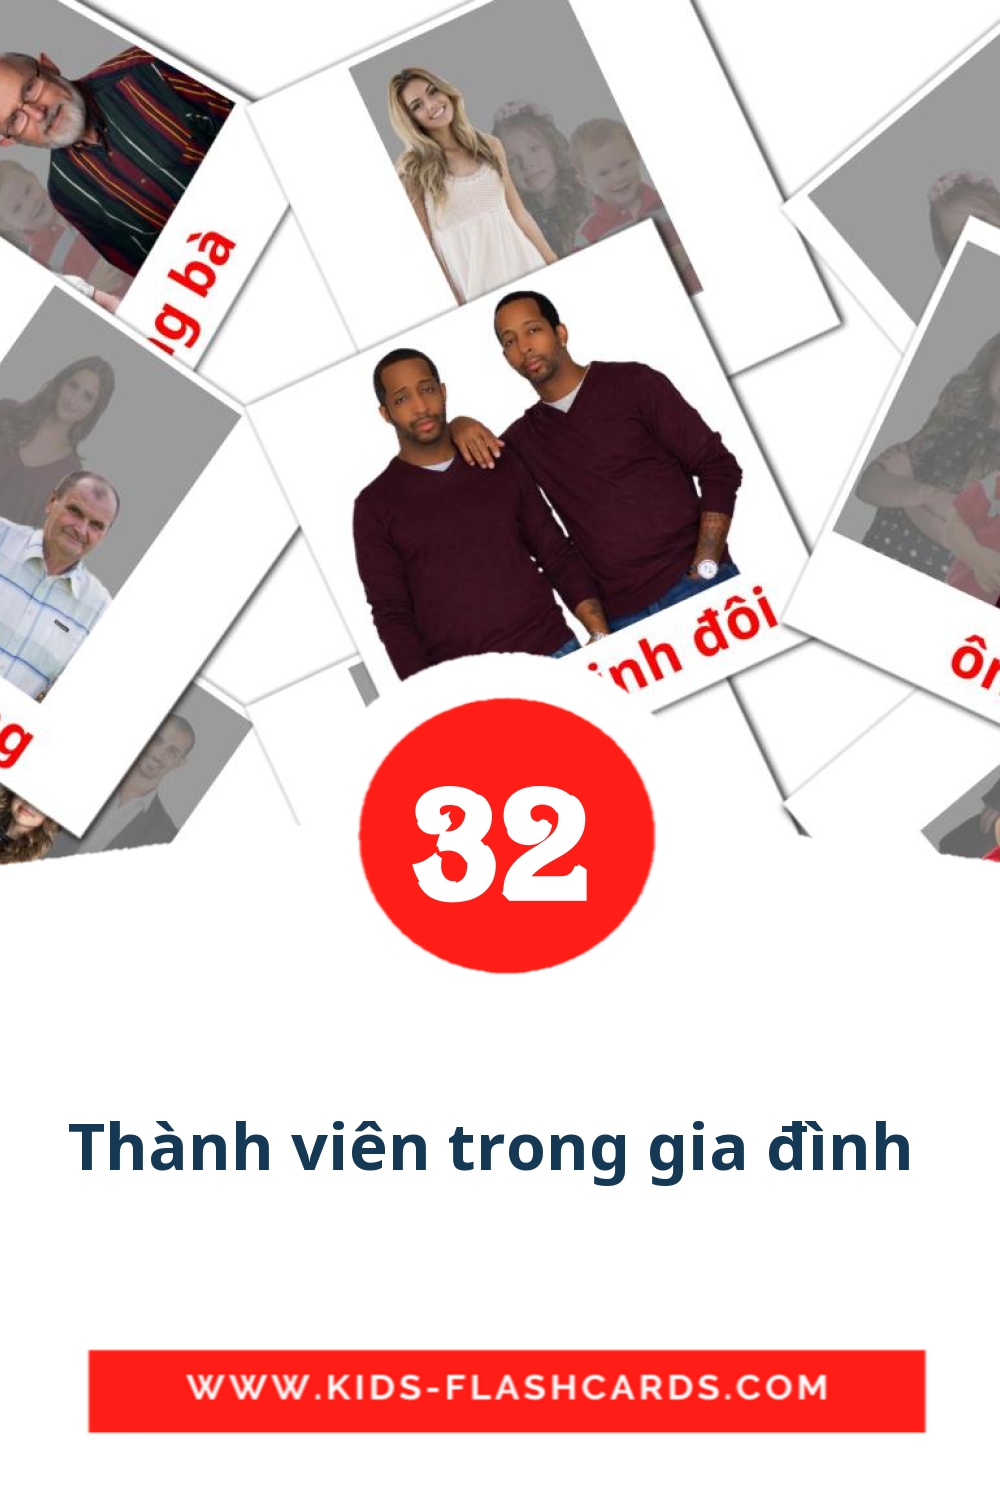 32 carte illustrate di Thành viên trong gia đình  per la scuola materna in vietnamita